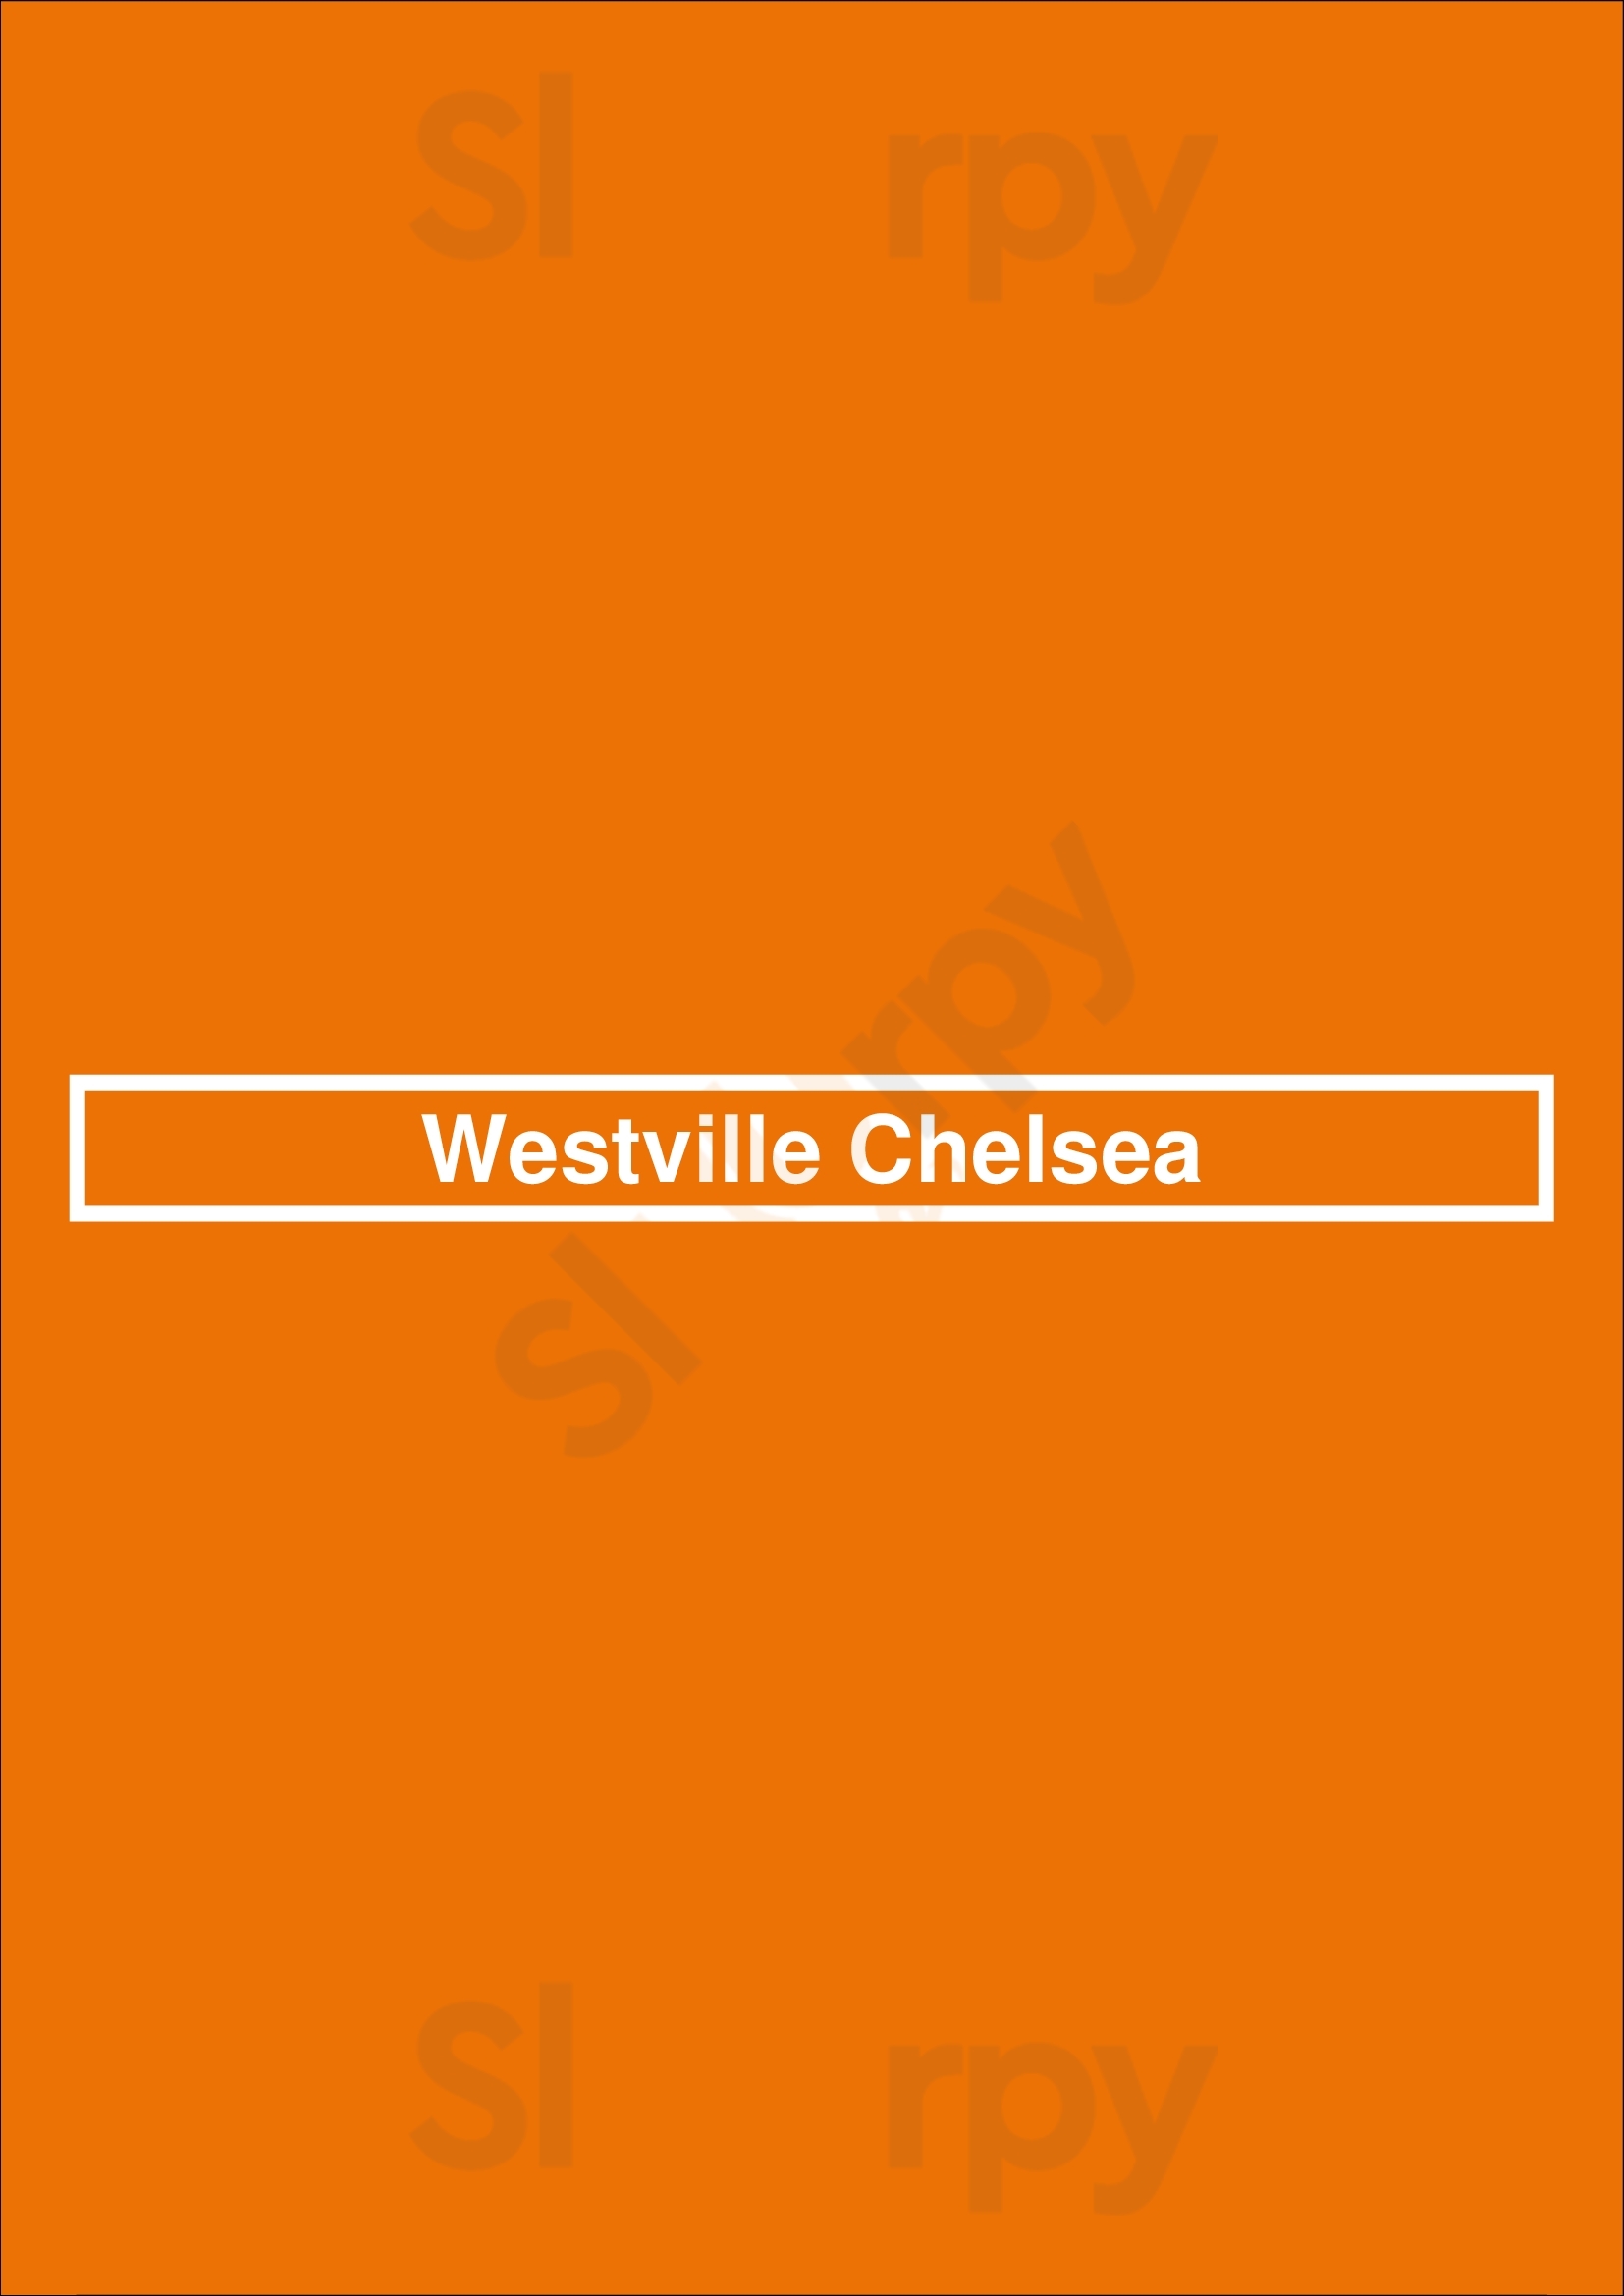 Westville Chelsea New York City Menu - 1